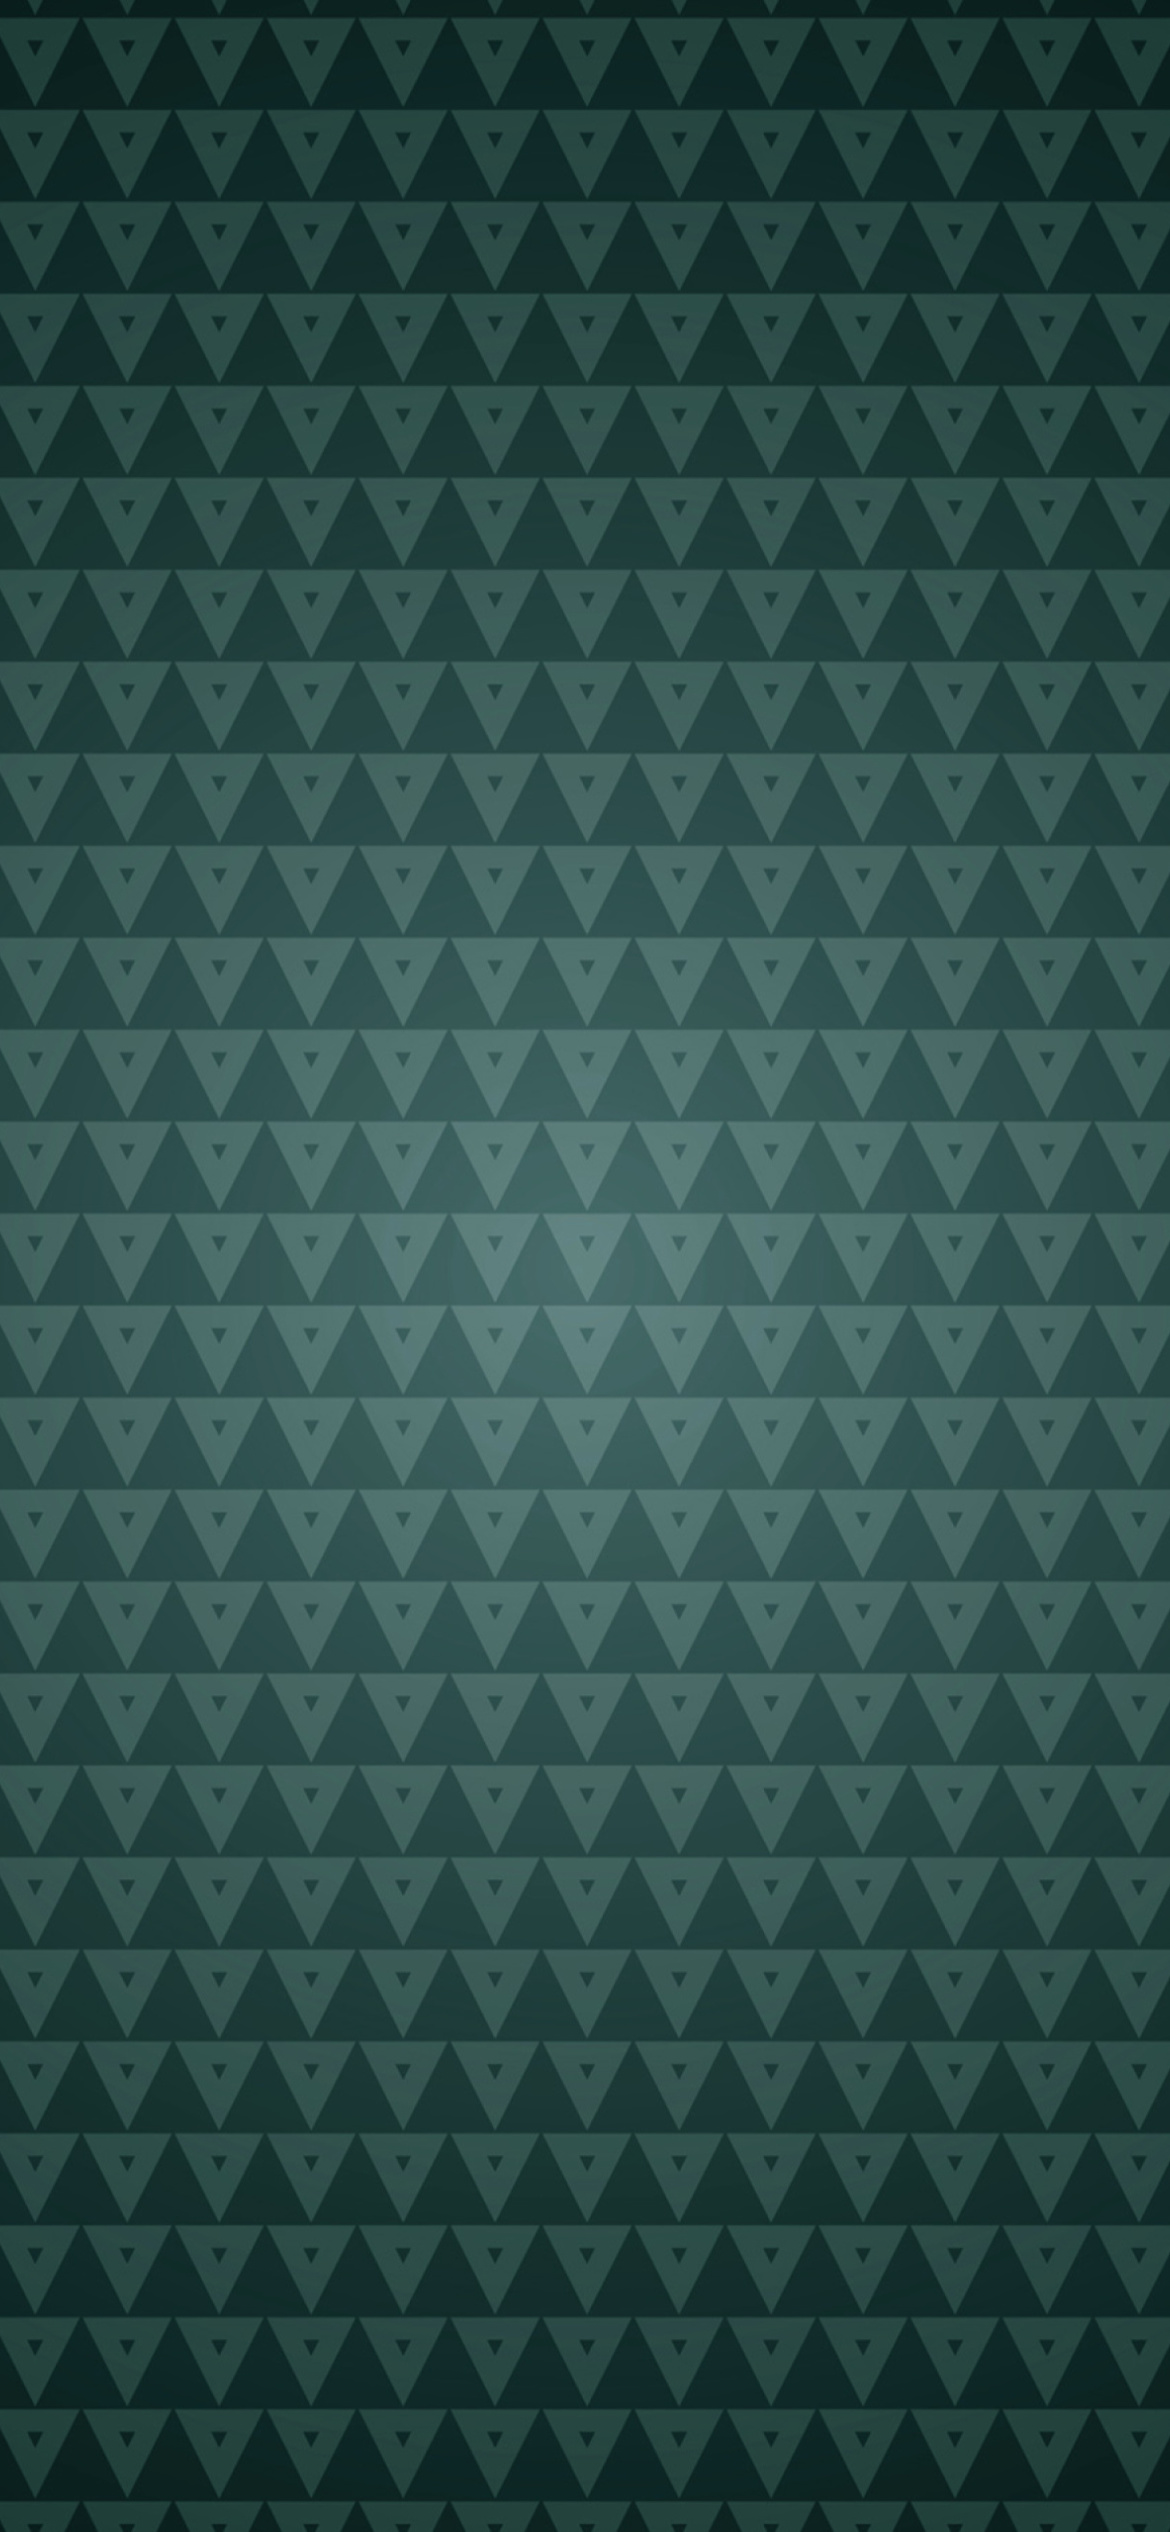 Checkerboard Pattern wallpaper 1170x2532